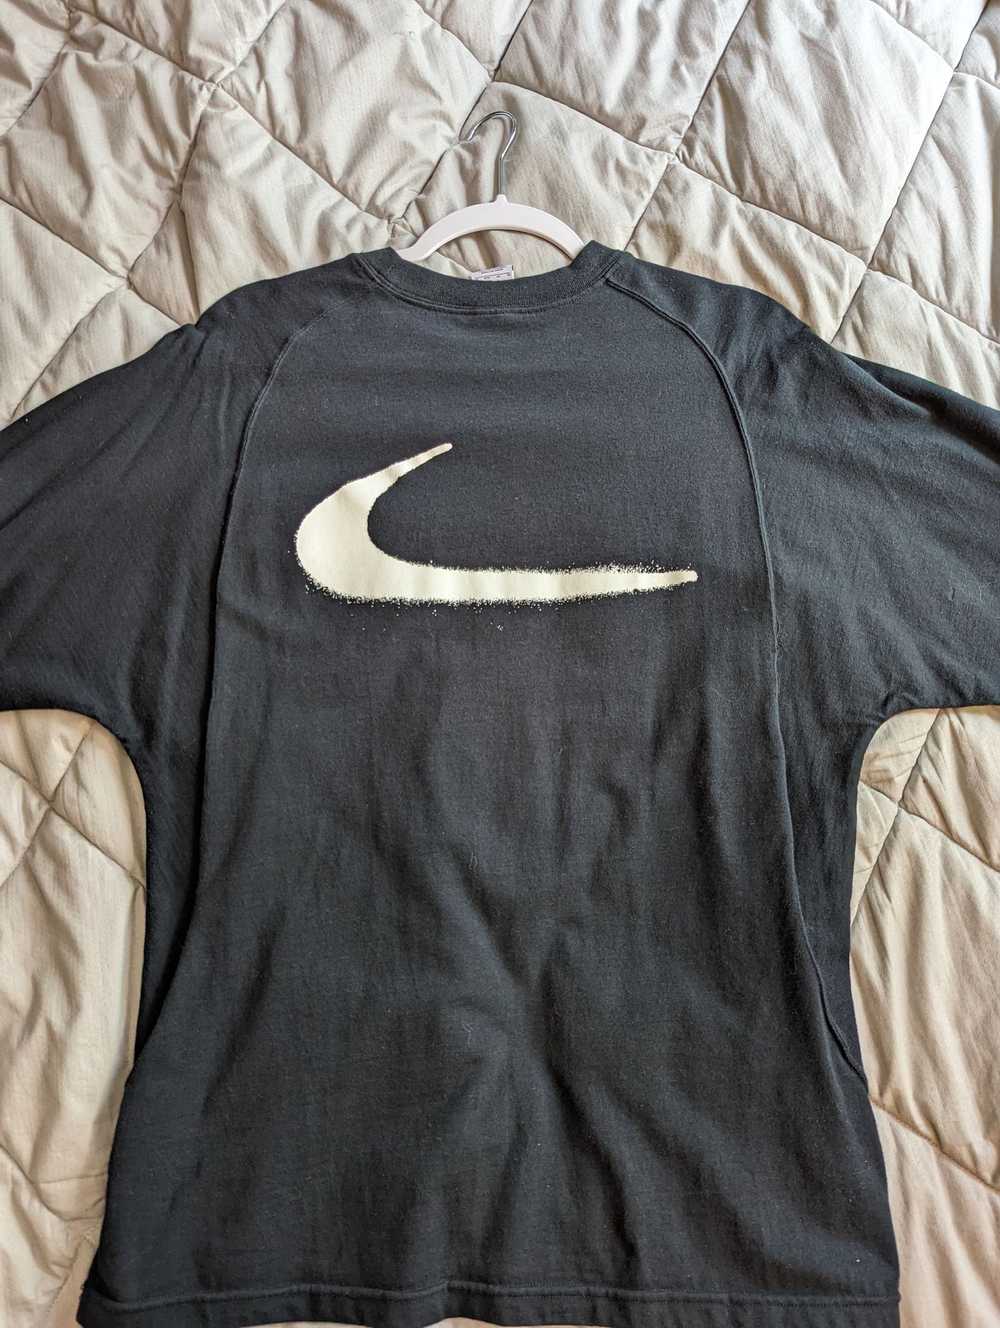 Nike × Off-White Nike x off-white shirt - image 2